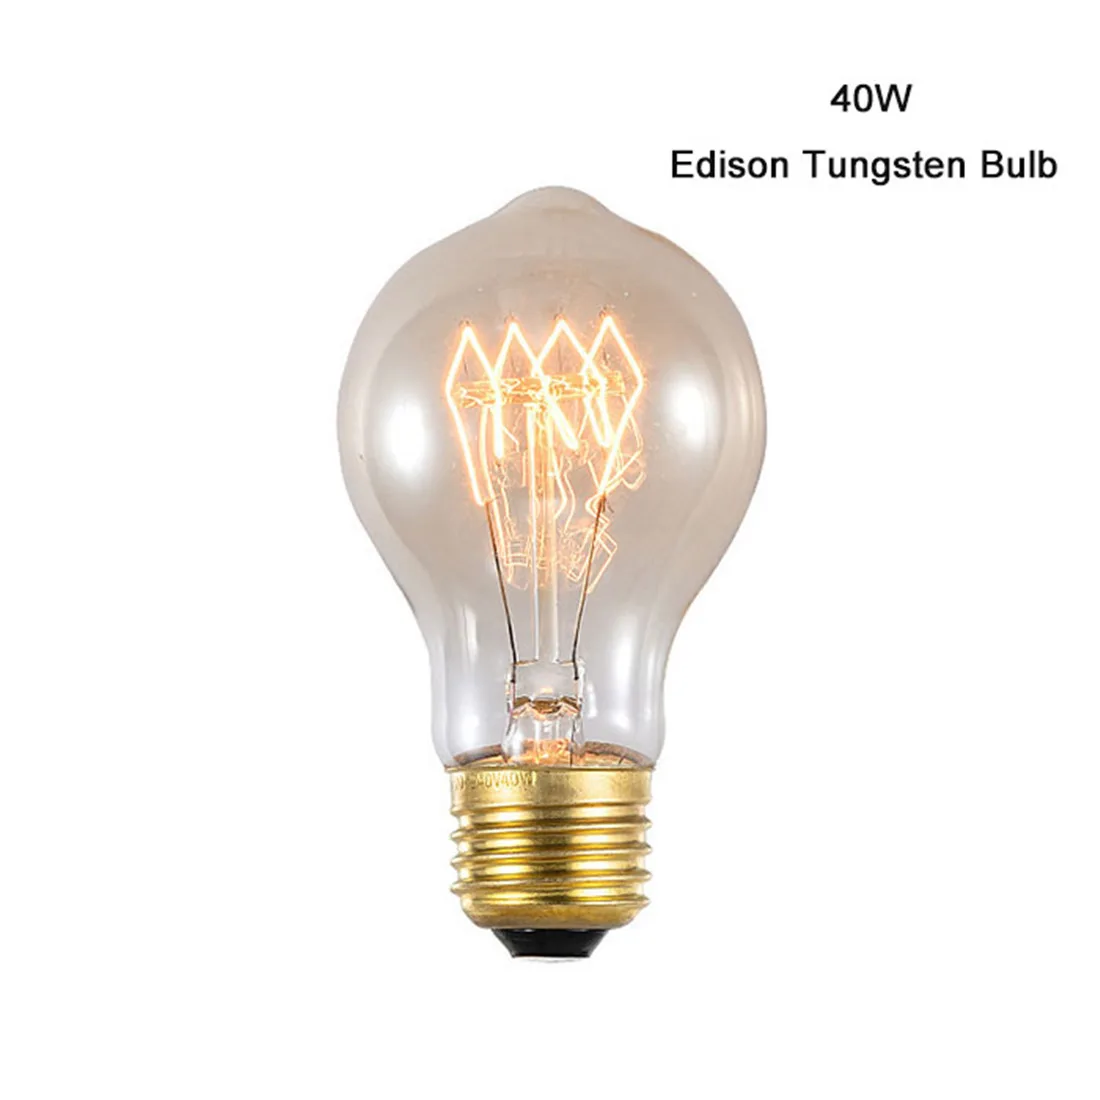 luz cálida 2200K 6 x CROWN LED Bombilla Edison 4W iluminación regulable base E27 estilo vintage 230V EL03